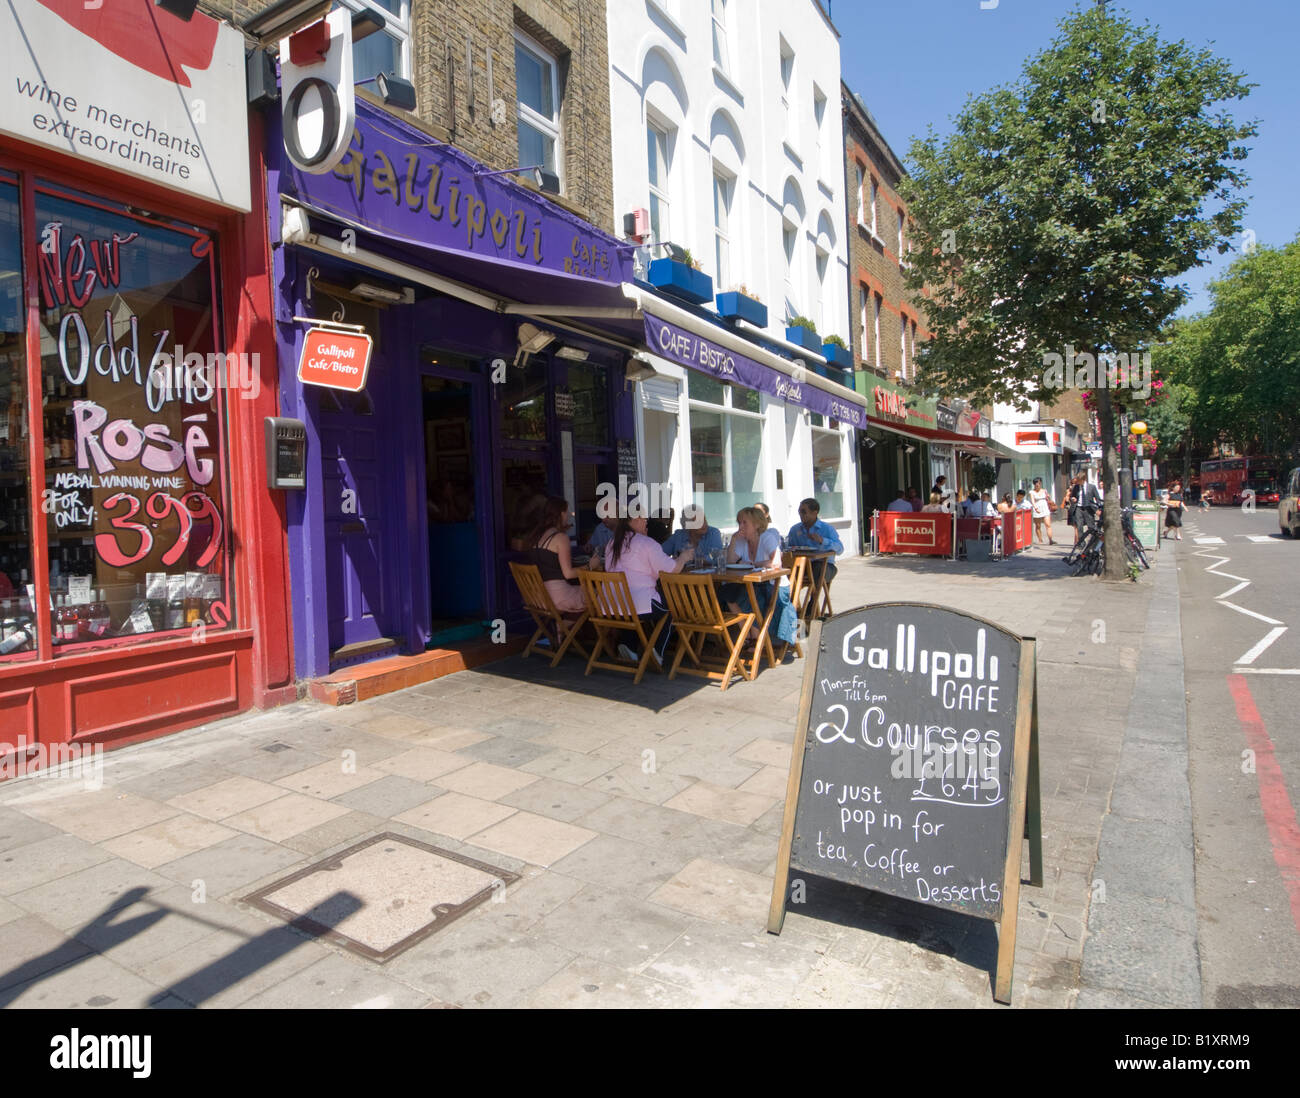 Gallipoli Restaurant Upper Street Islington London Stockfoto